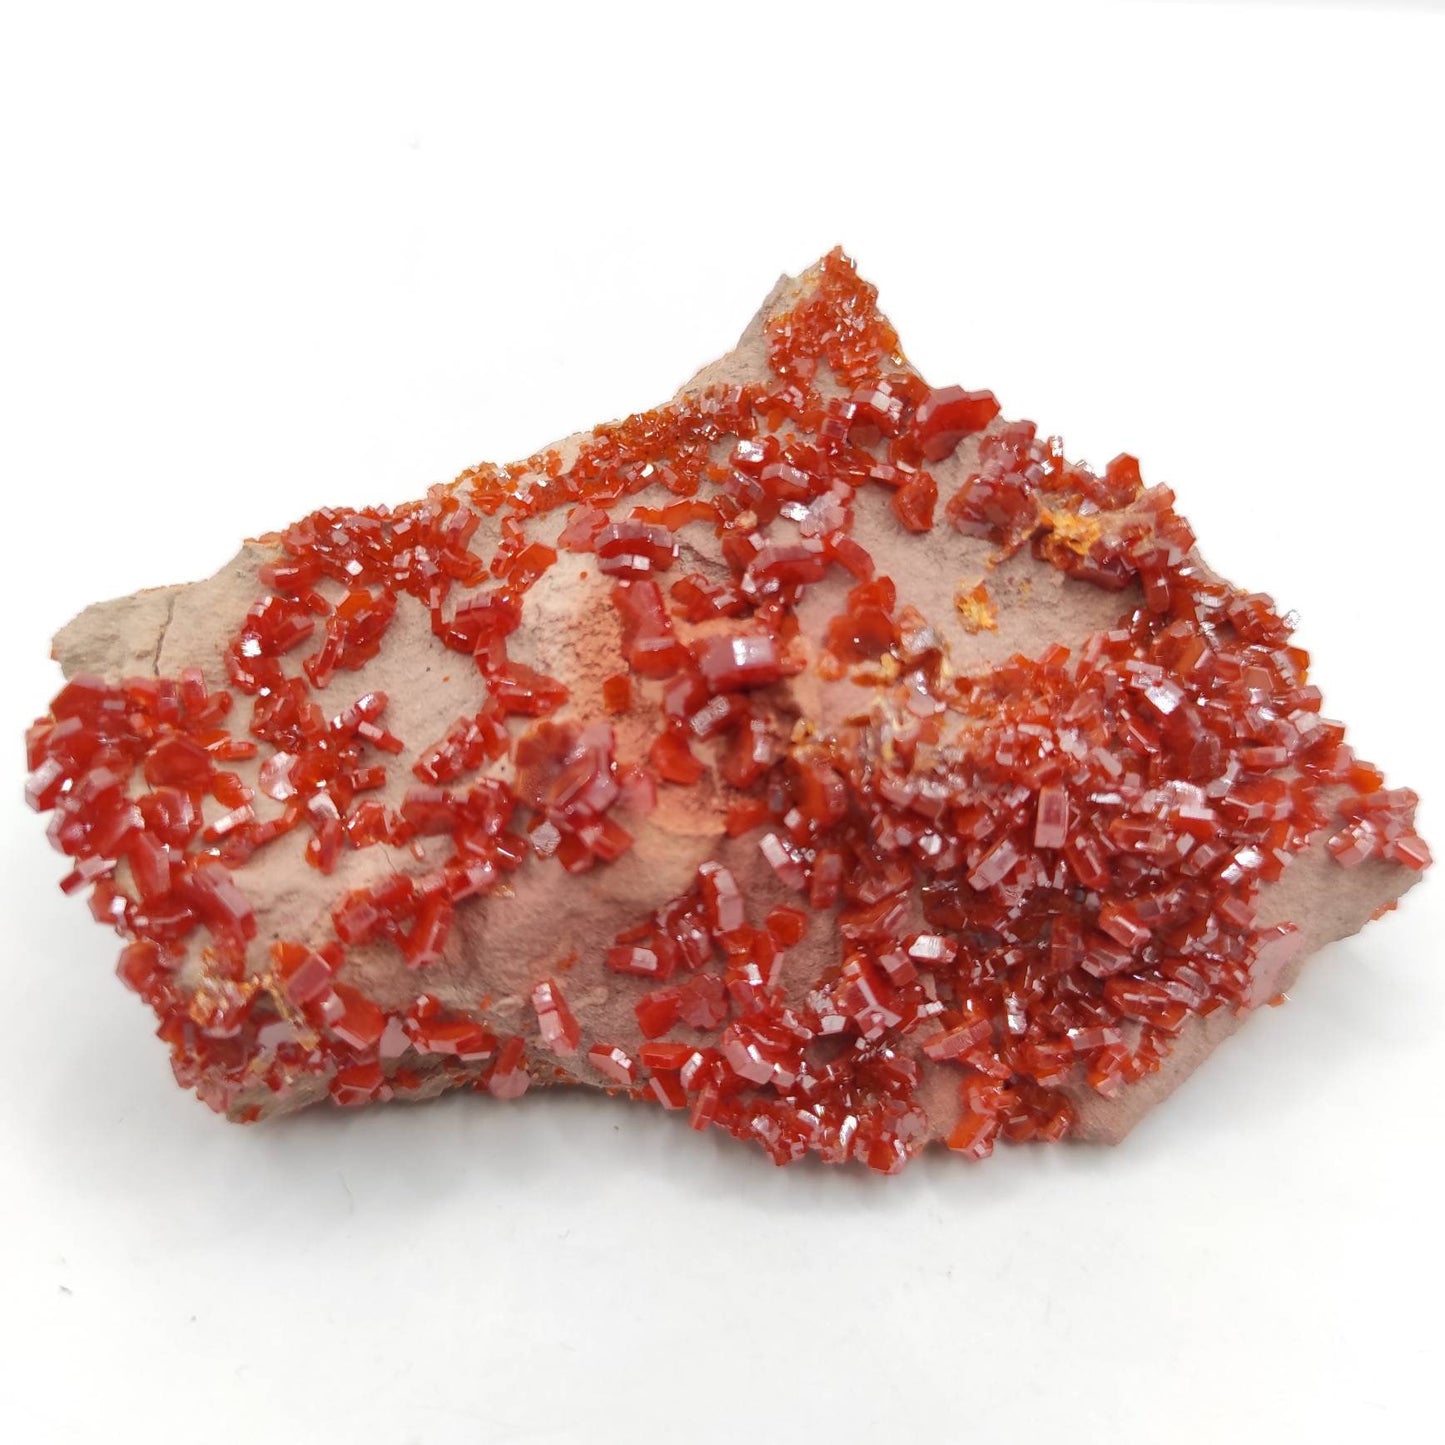 104g Vanadinite on Matrix - Red Vanadinite Crystals - High Quality Vanadinite - Collectors Grade Mineral Specimen - Mibladen, Morocco